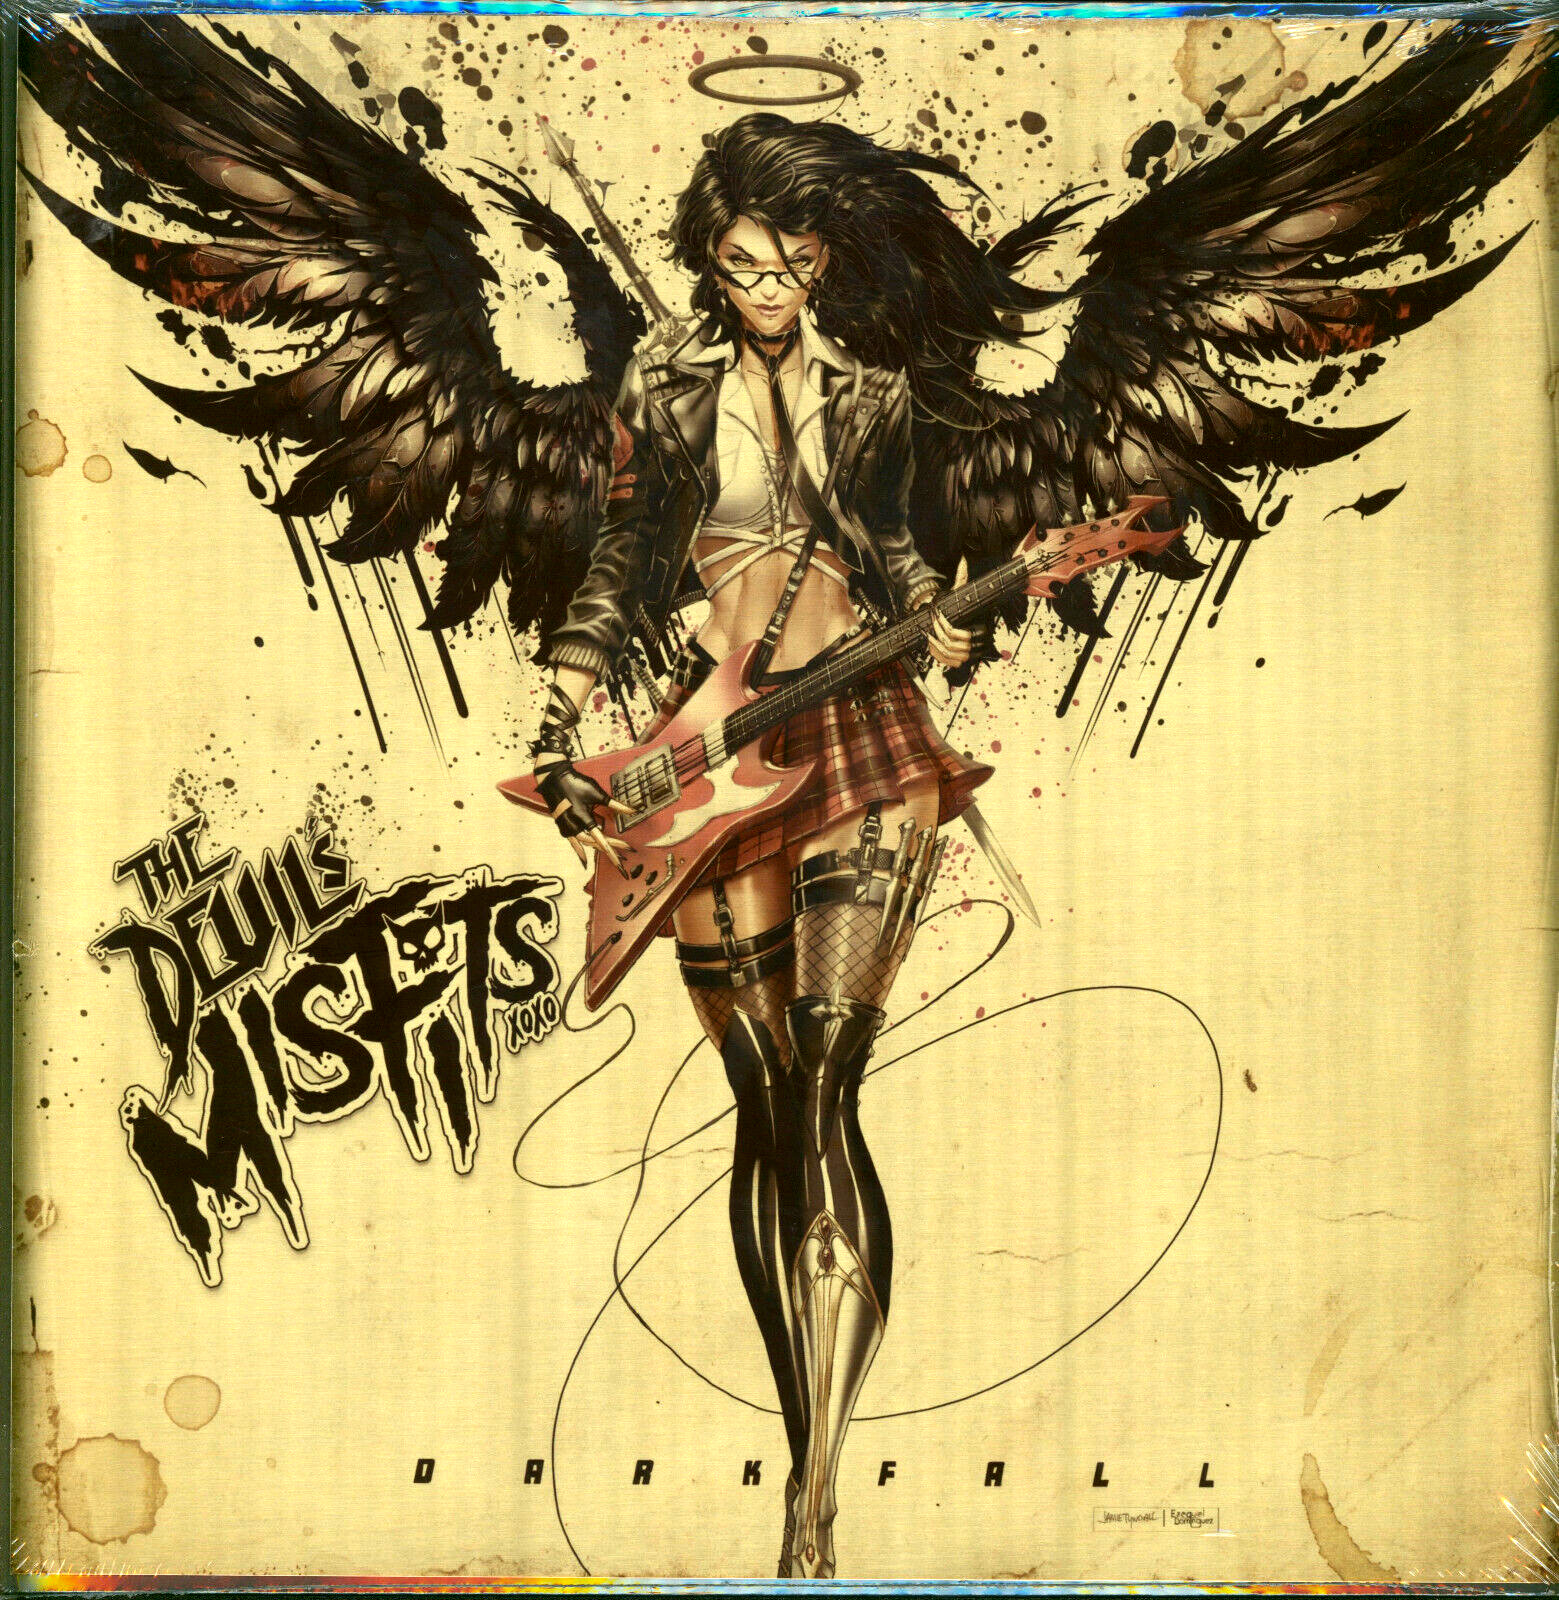 The Devil’s Misfit's Jamie Tyndall Darkfall Gold Metal Album Cover Sealed